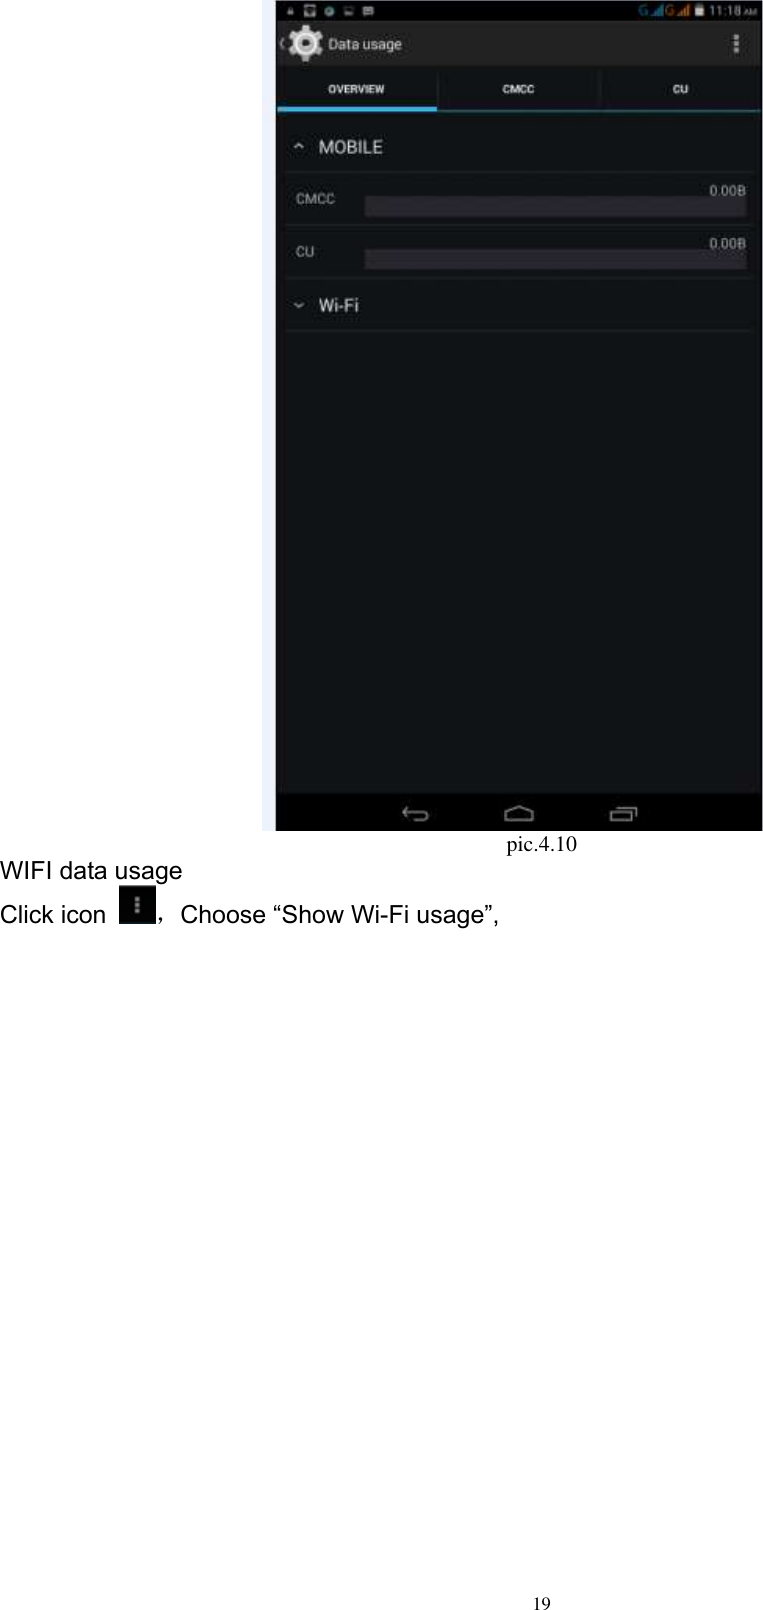      19  pic.4.10 WIFI data usage Click icon  ，Choose “Show Wi-Fi usage”, 